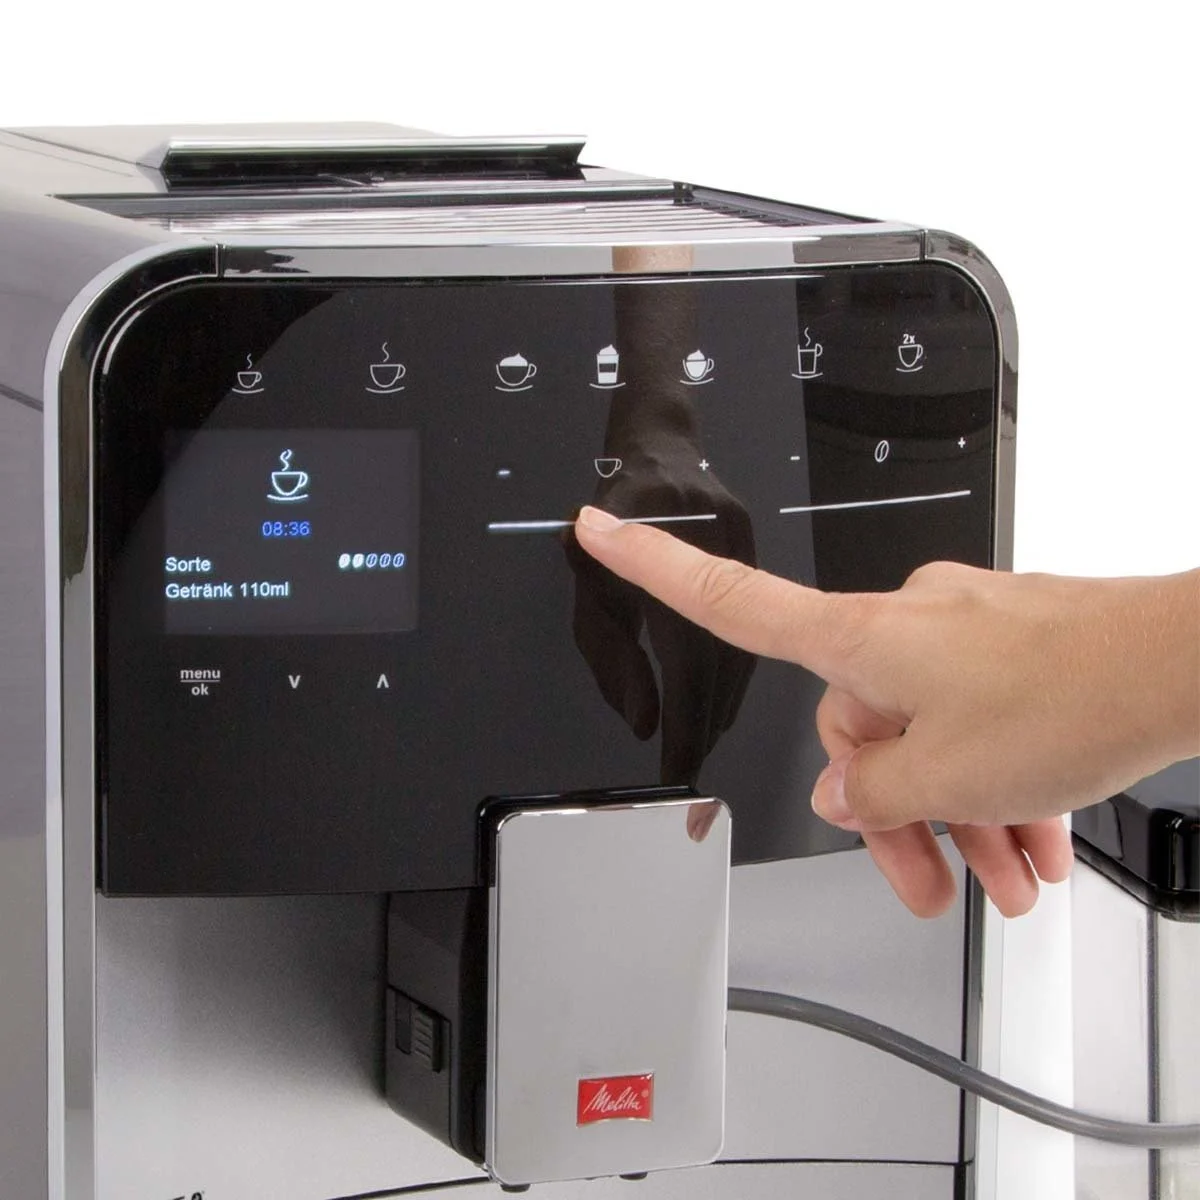 Melitta Caffeo Barista TS Smart Tam Otomatik Kahve Makinesi Siyah